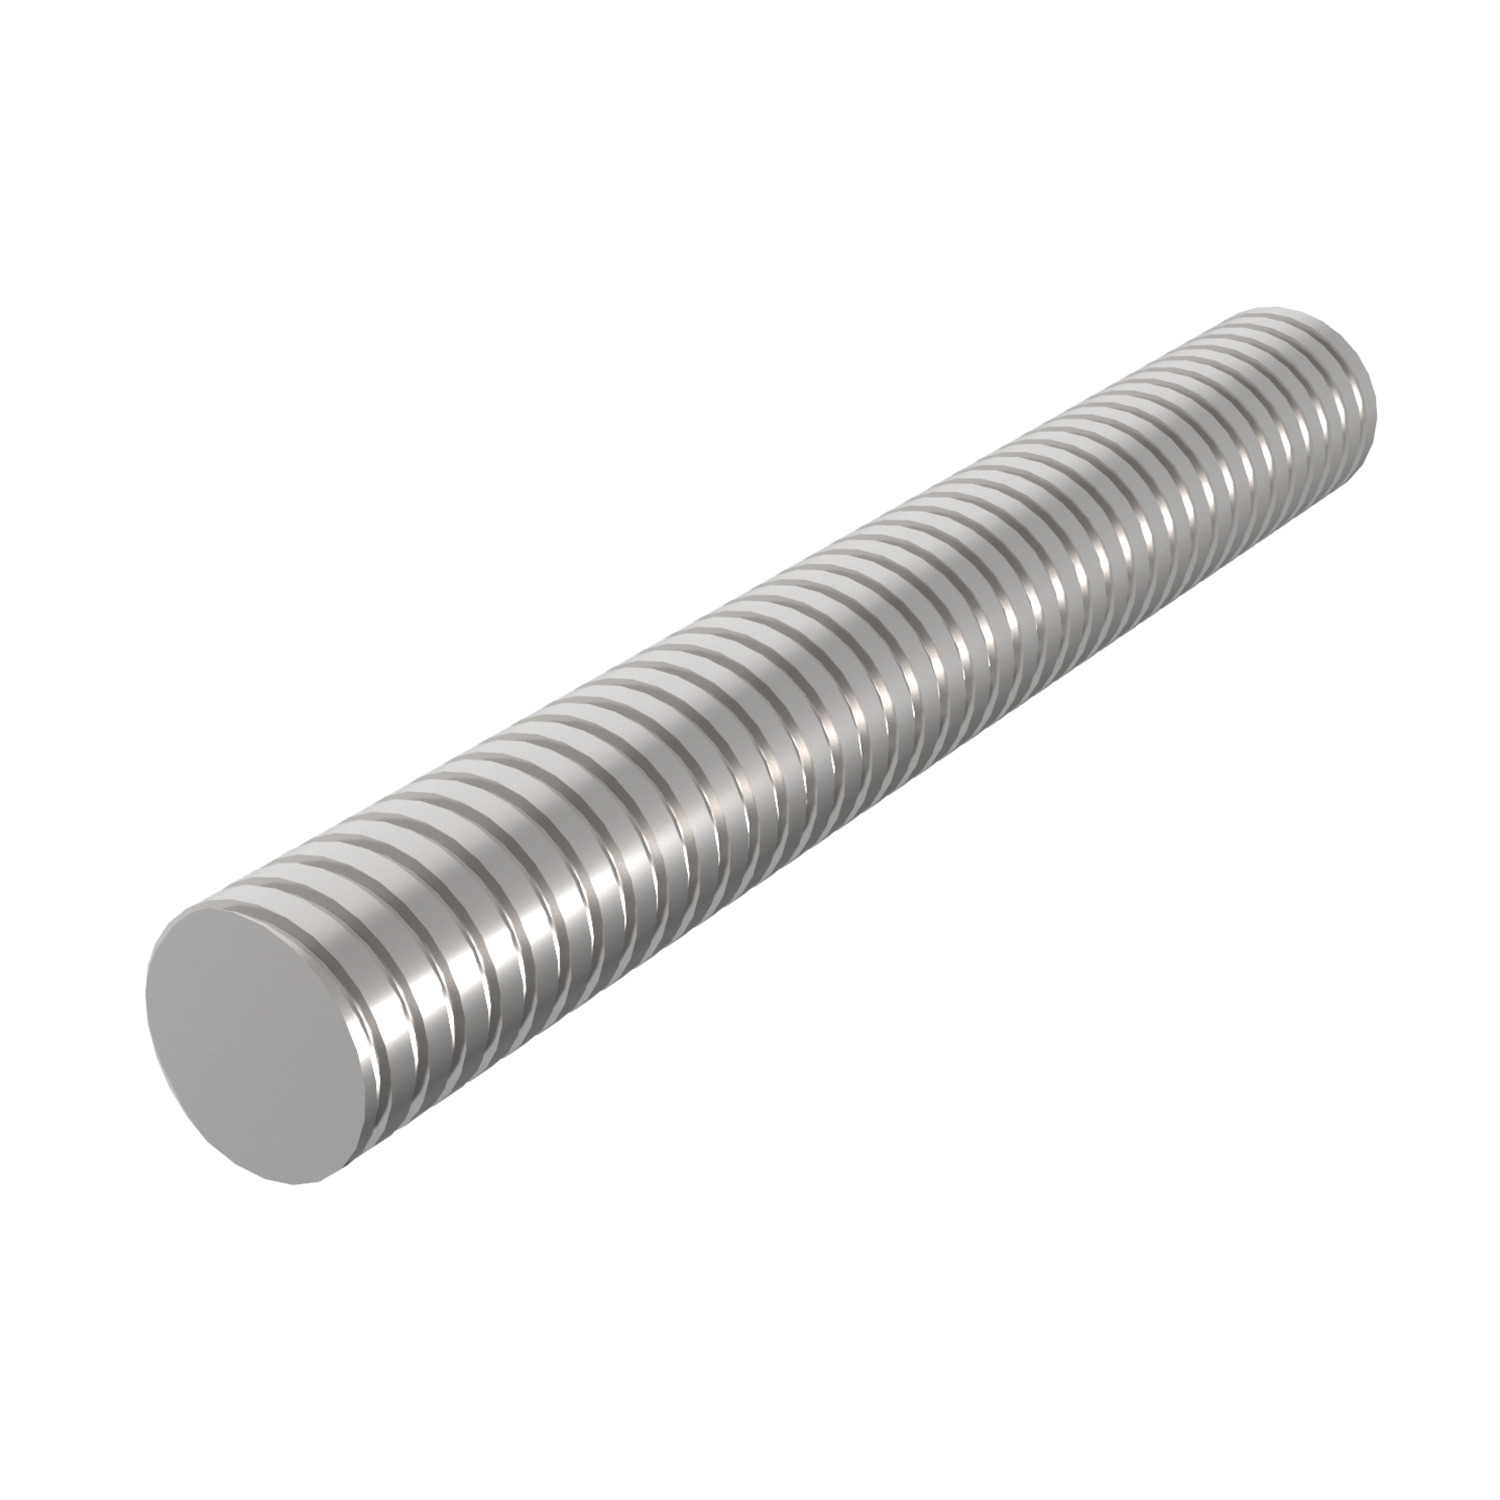 Steel Lead Screws Steel trapeziodal lead screws TR10 to 120. Right hand thread.